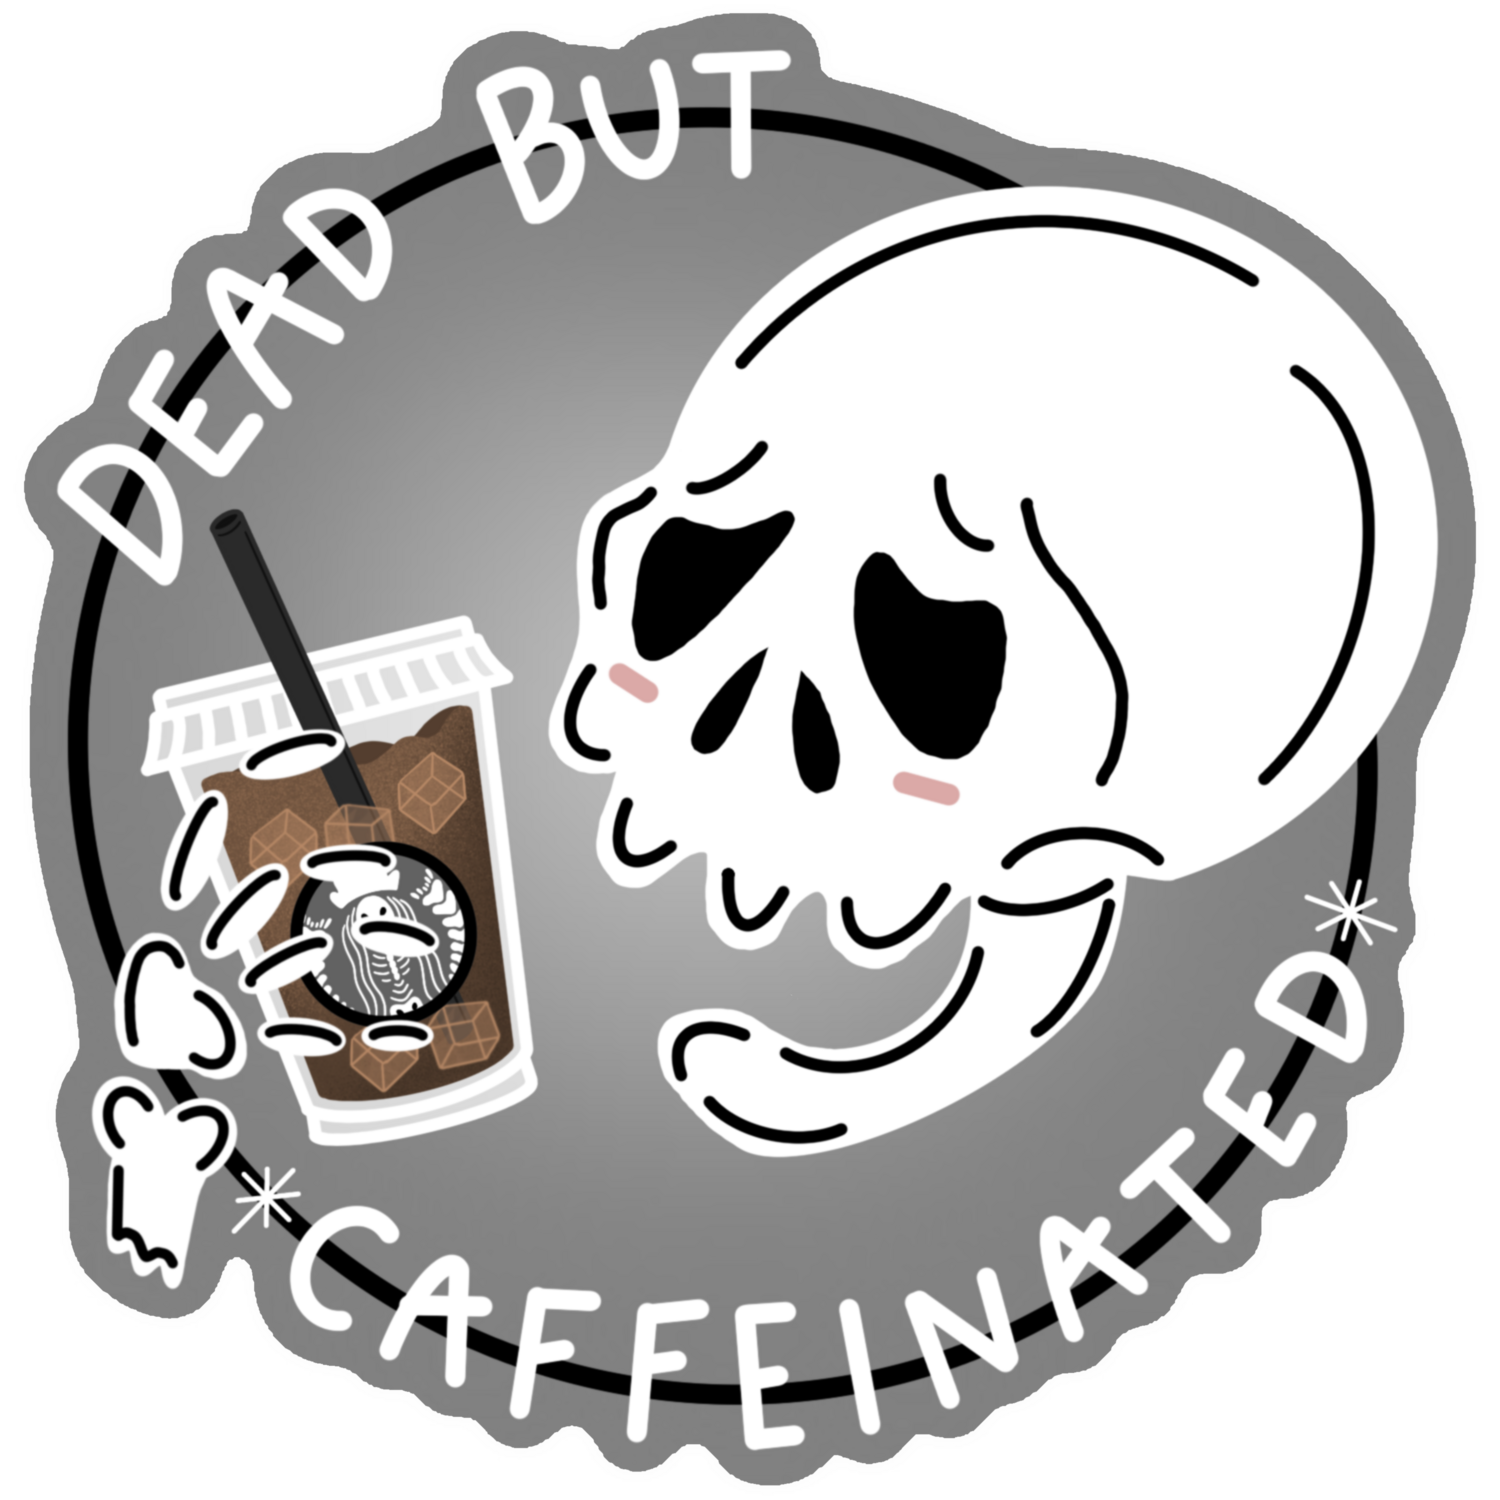 Dead But Caffeinated